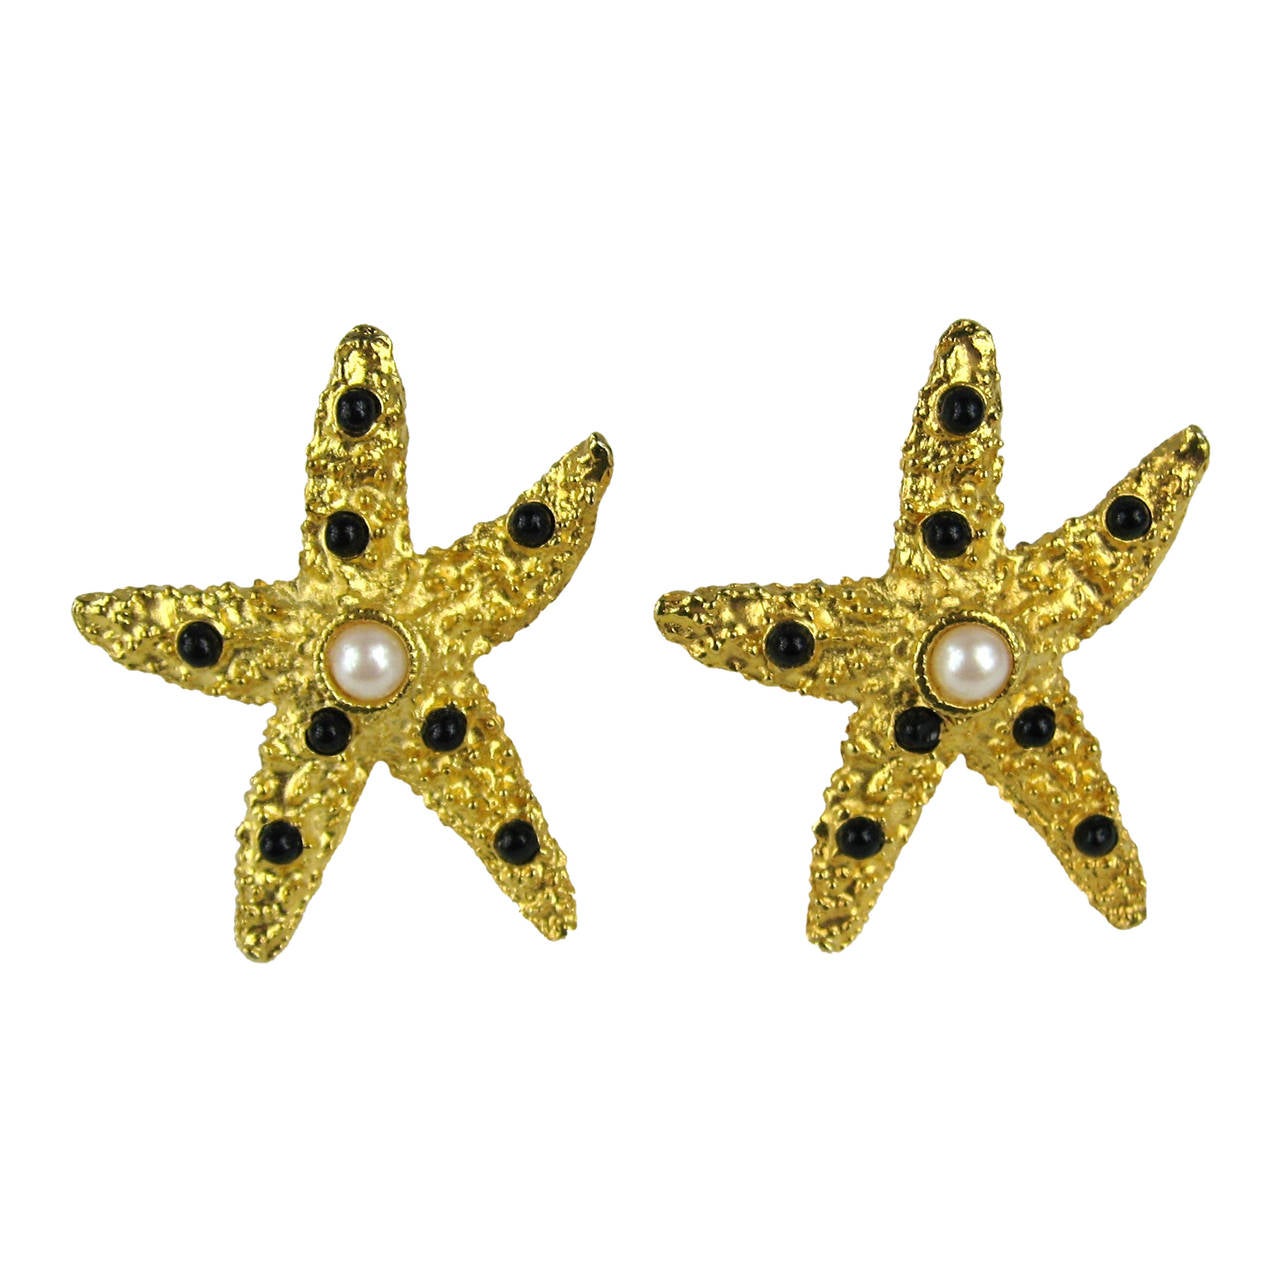 YOSCA Gripoix Pearl Starfish Earrings 1990s Gold tone New Old Stock